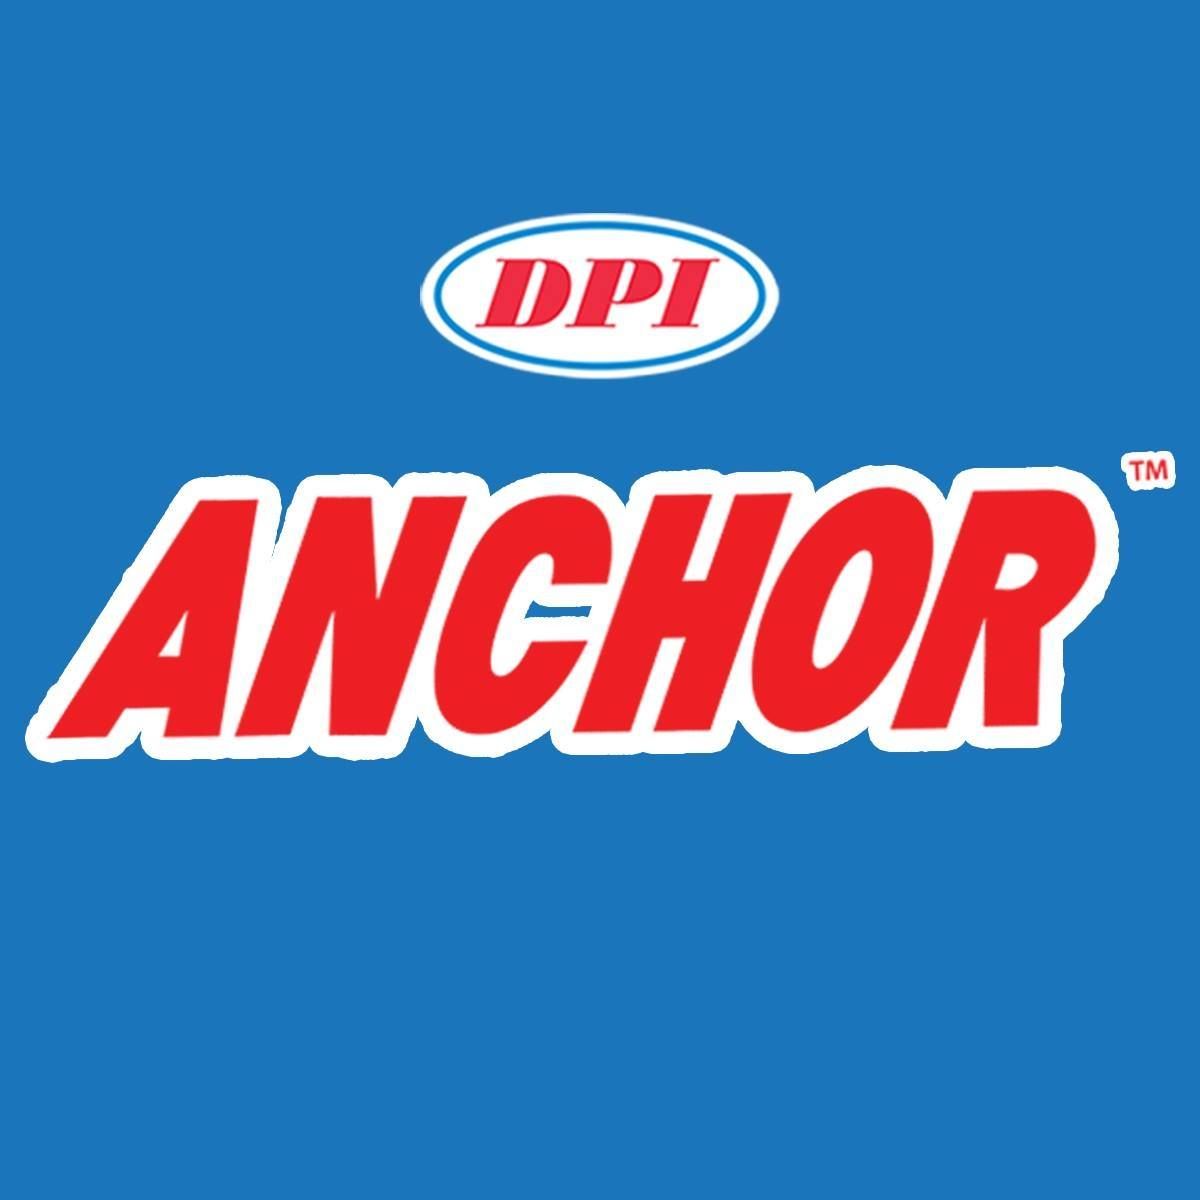 DPI- ANCHOR